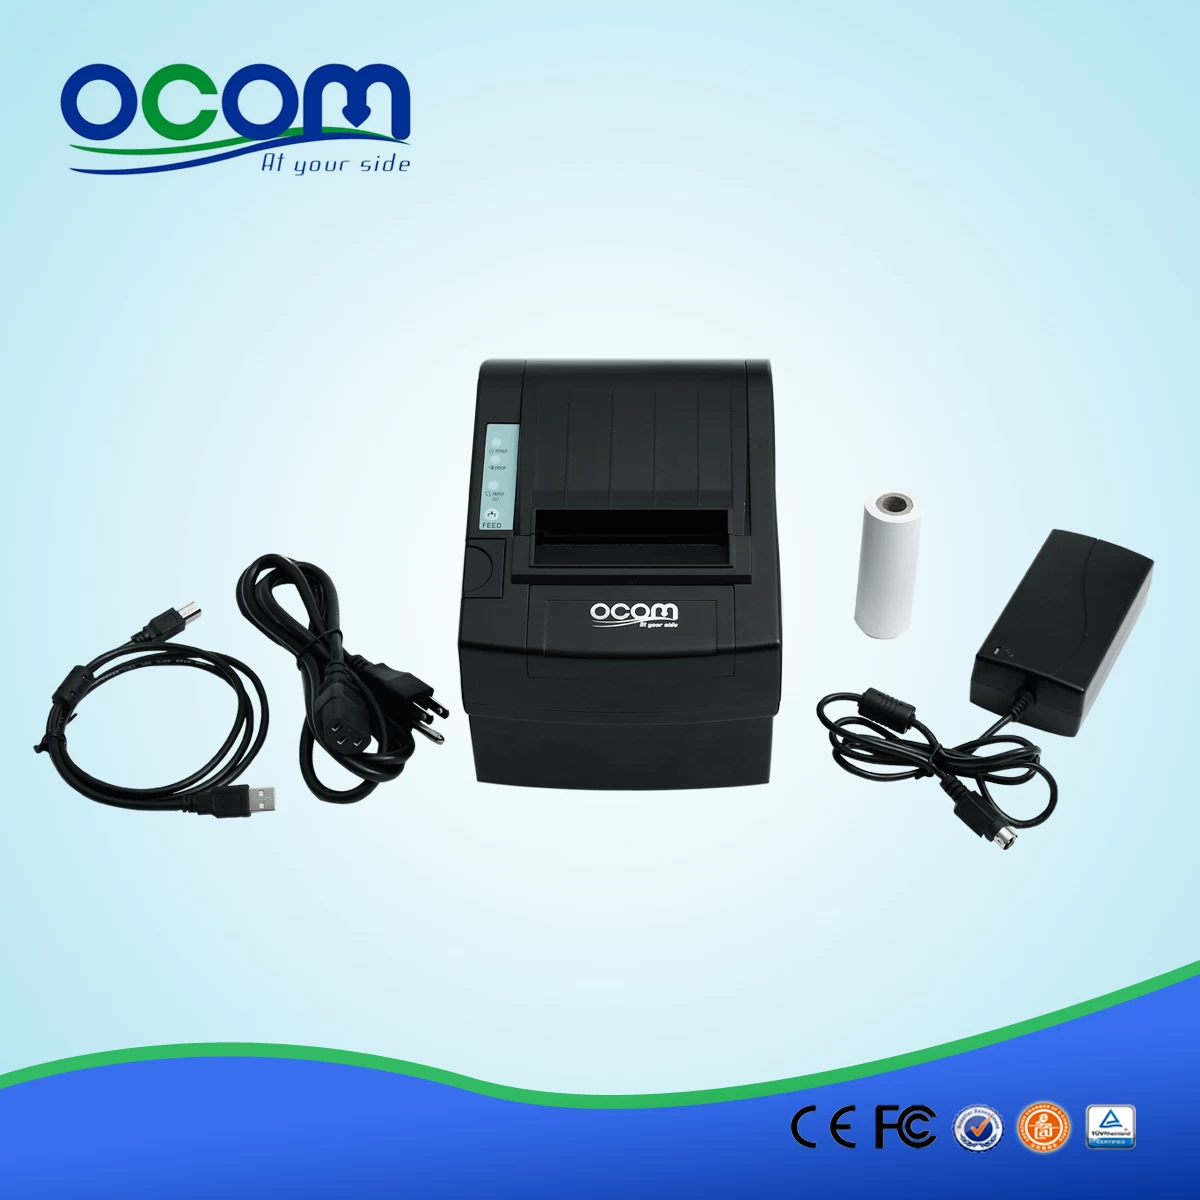 80mm Wifi Thermal Receipt Printer OCPP-806-W